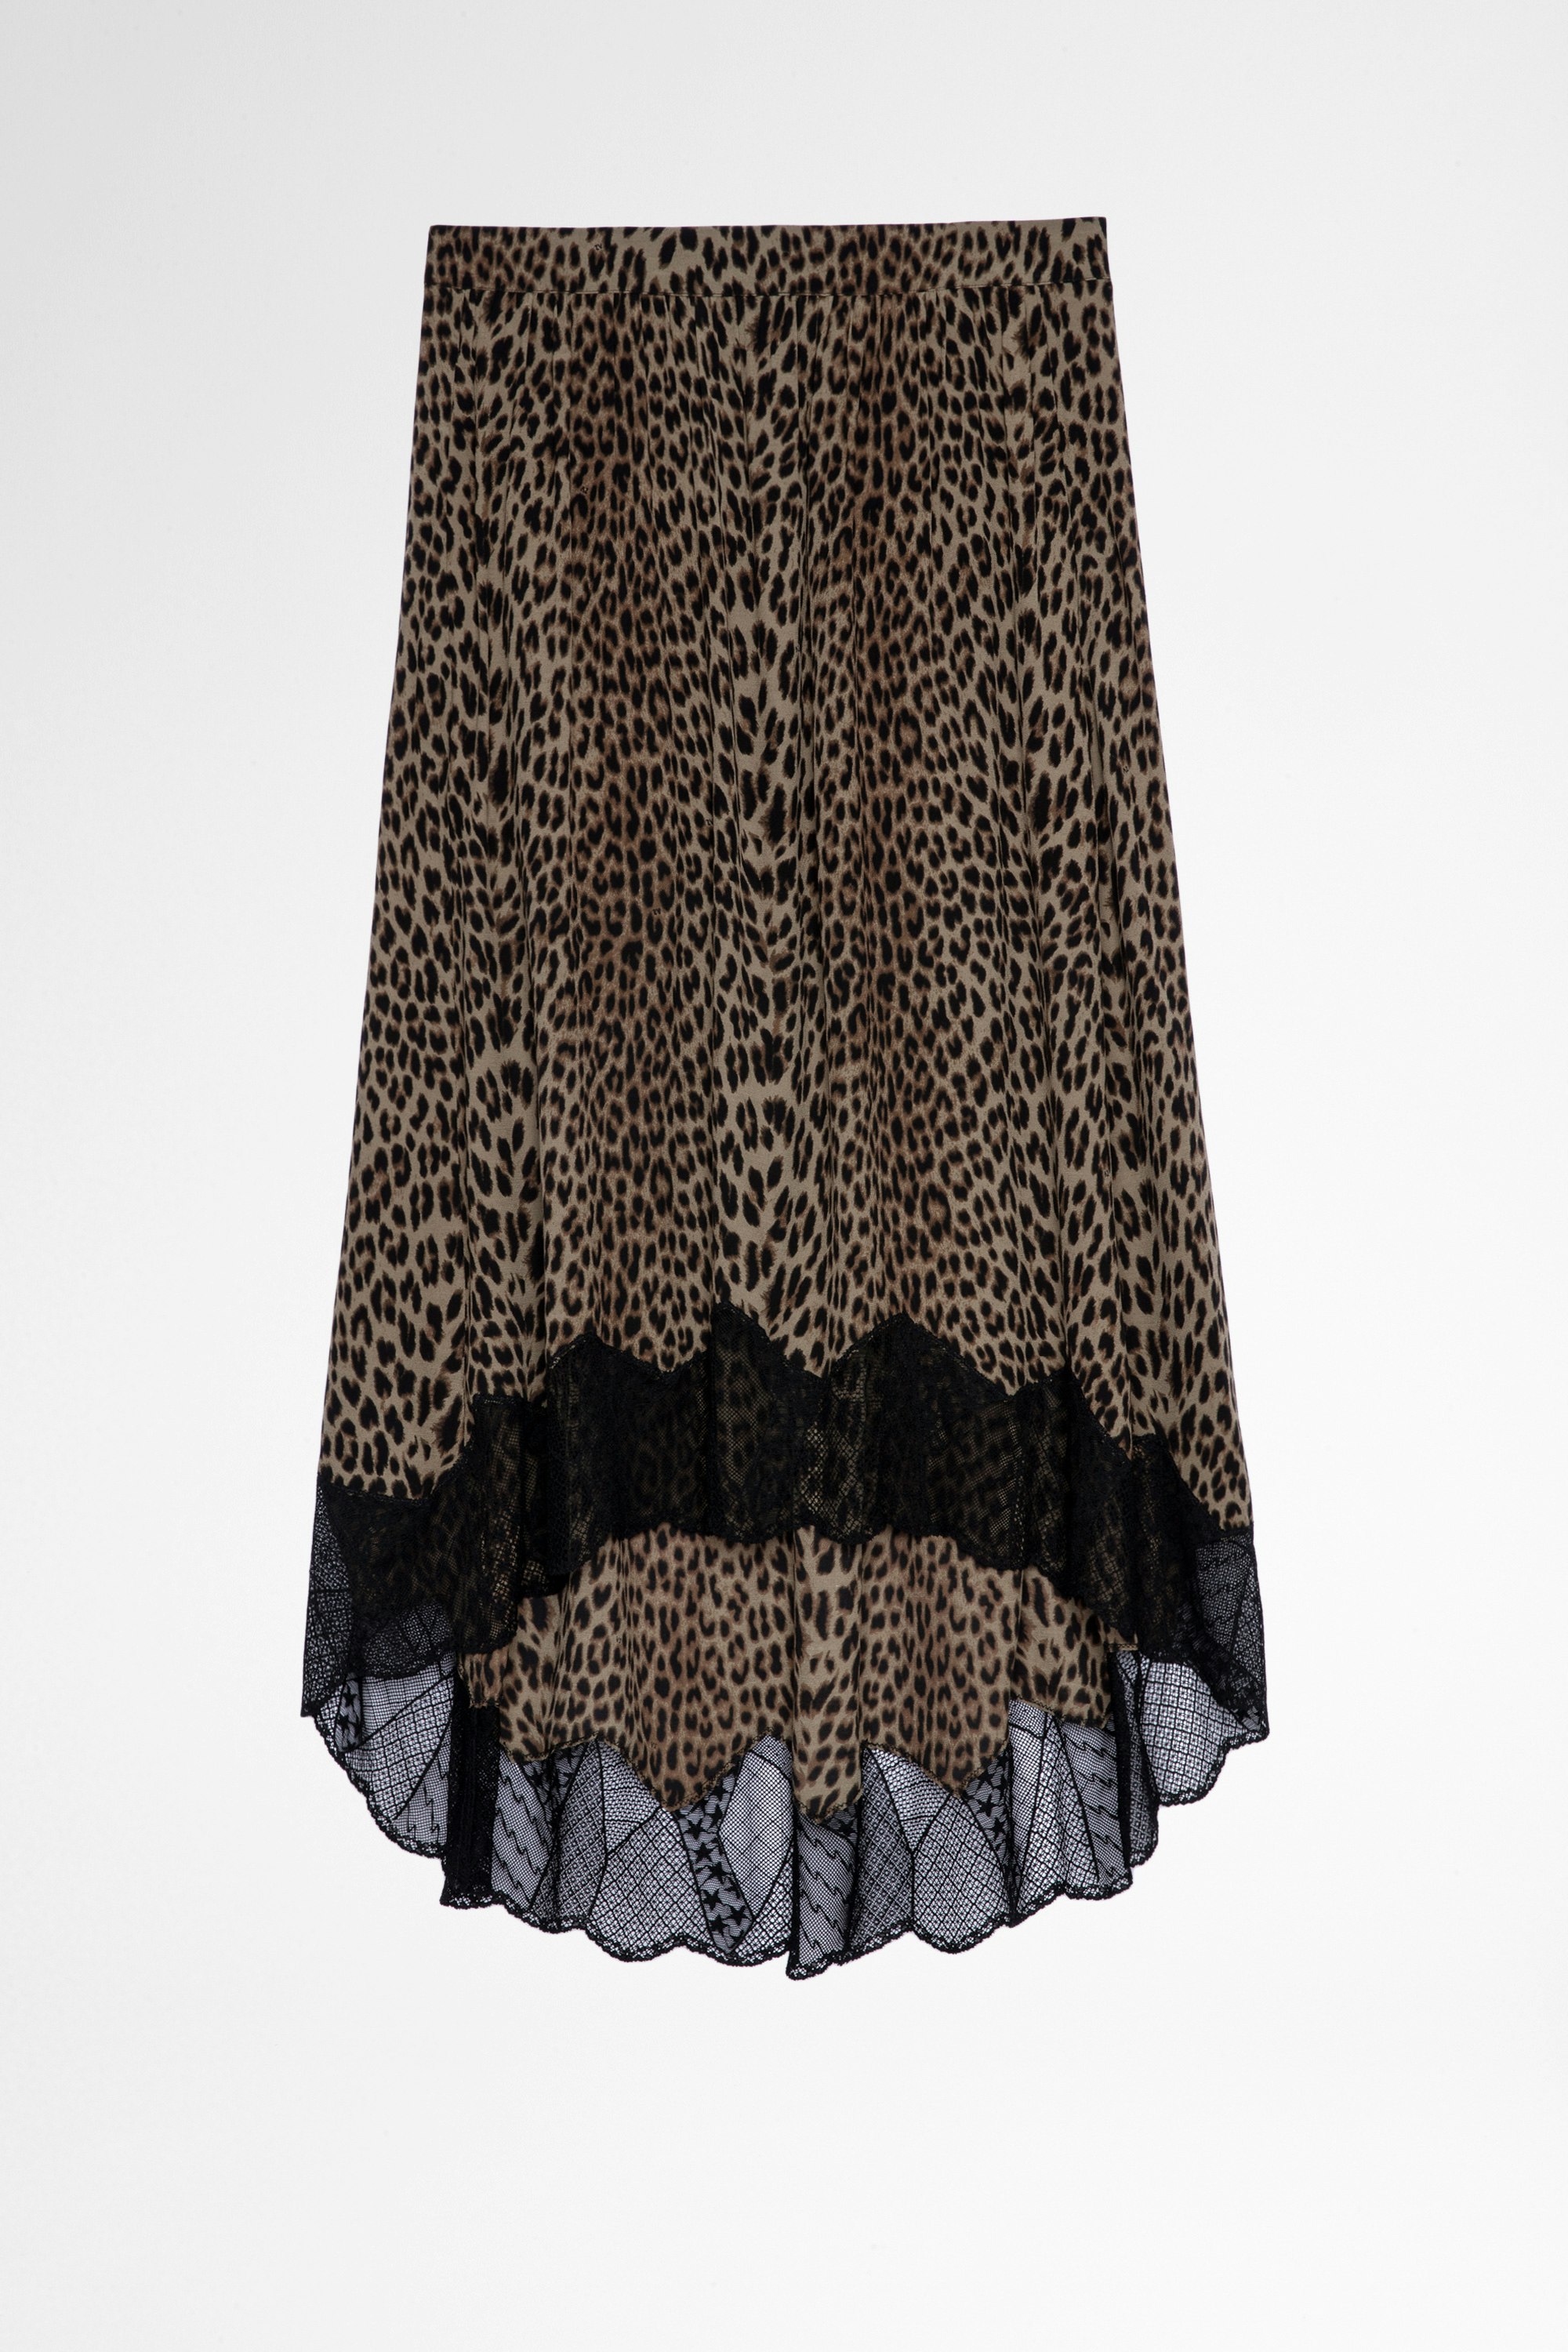 Joslin Leopard Skirt Women's mid-length asymmetric khaki leopard print skirt